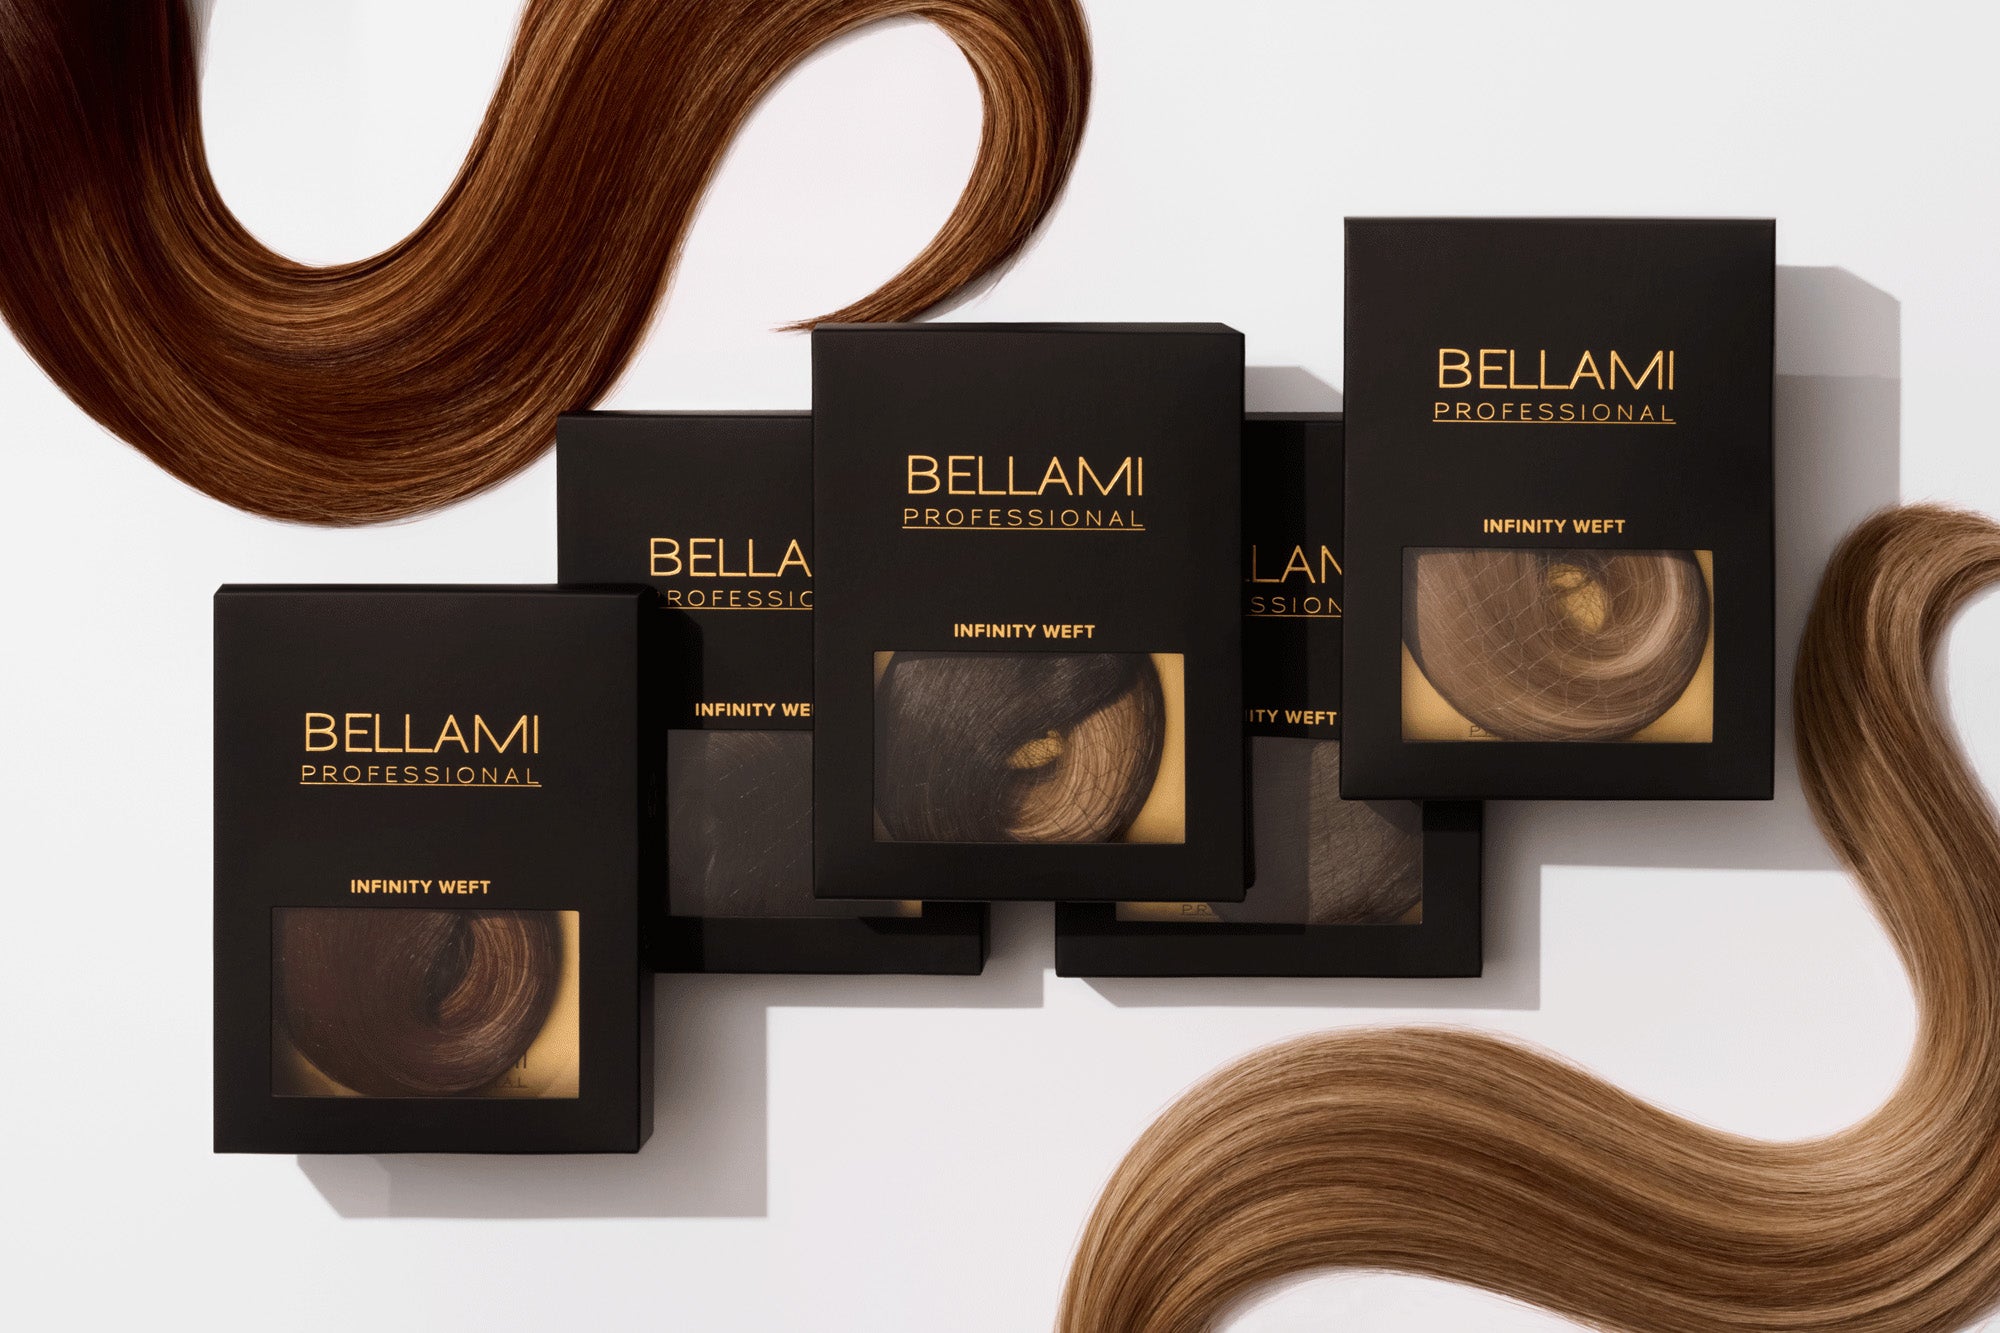 BELLAMI PROFESSIONAL HAIR EXTENSIONS